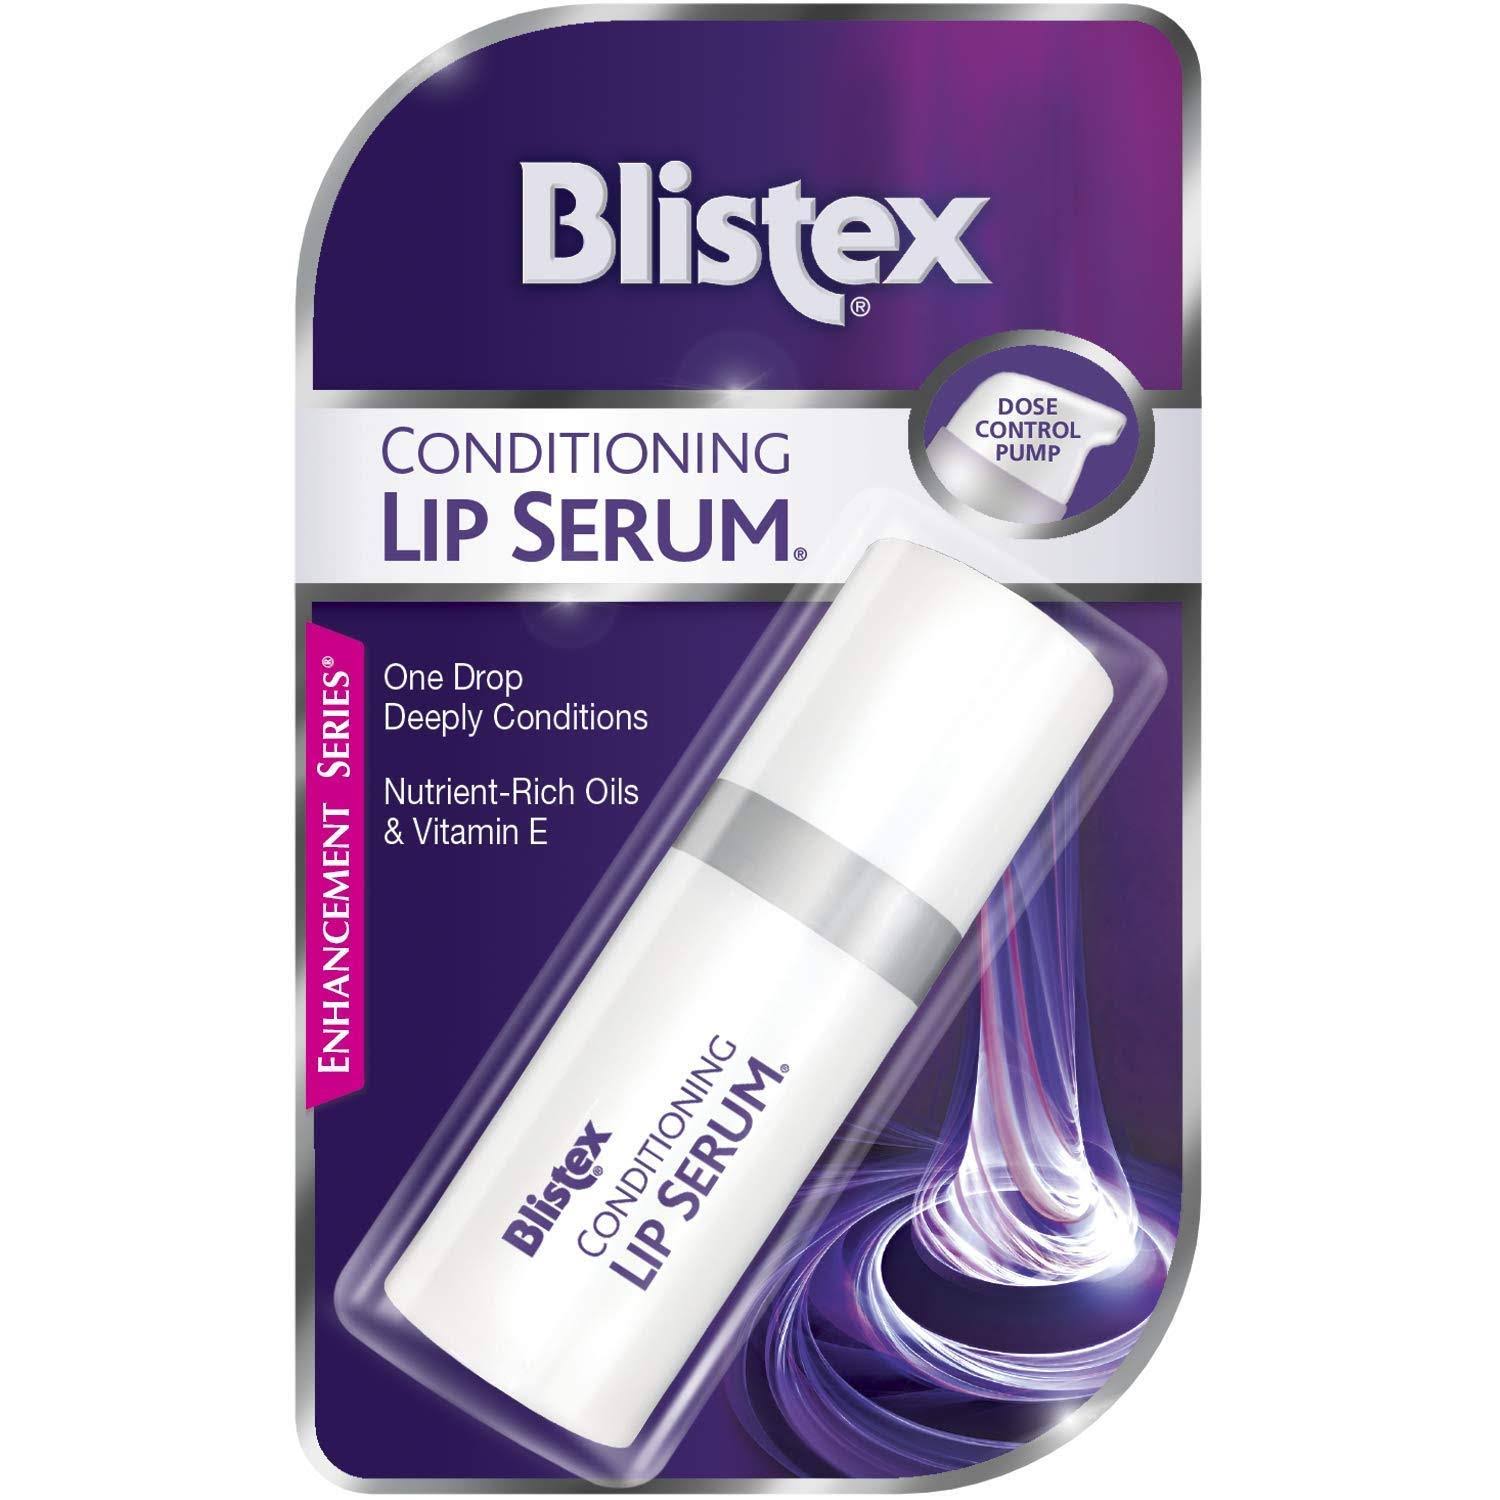 Blistex Conditioning Lip Serum Moisturizer - Pack of 2, 0.30oz